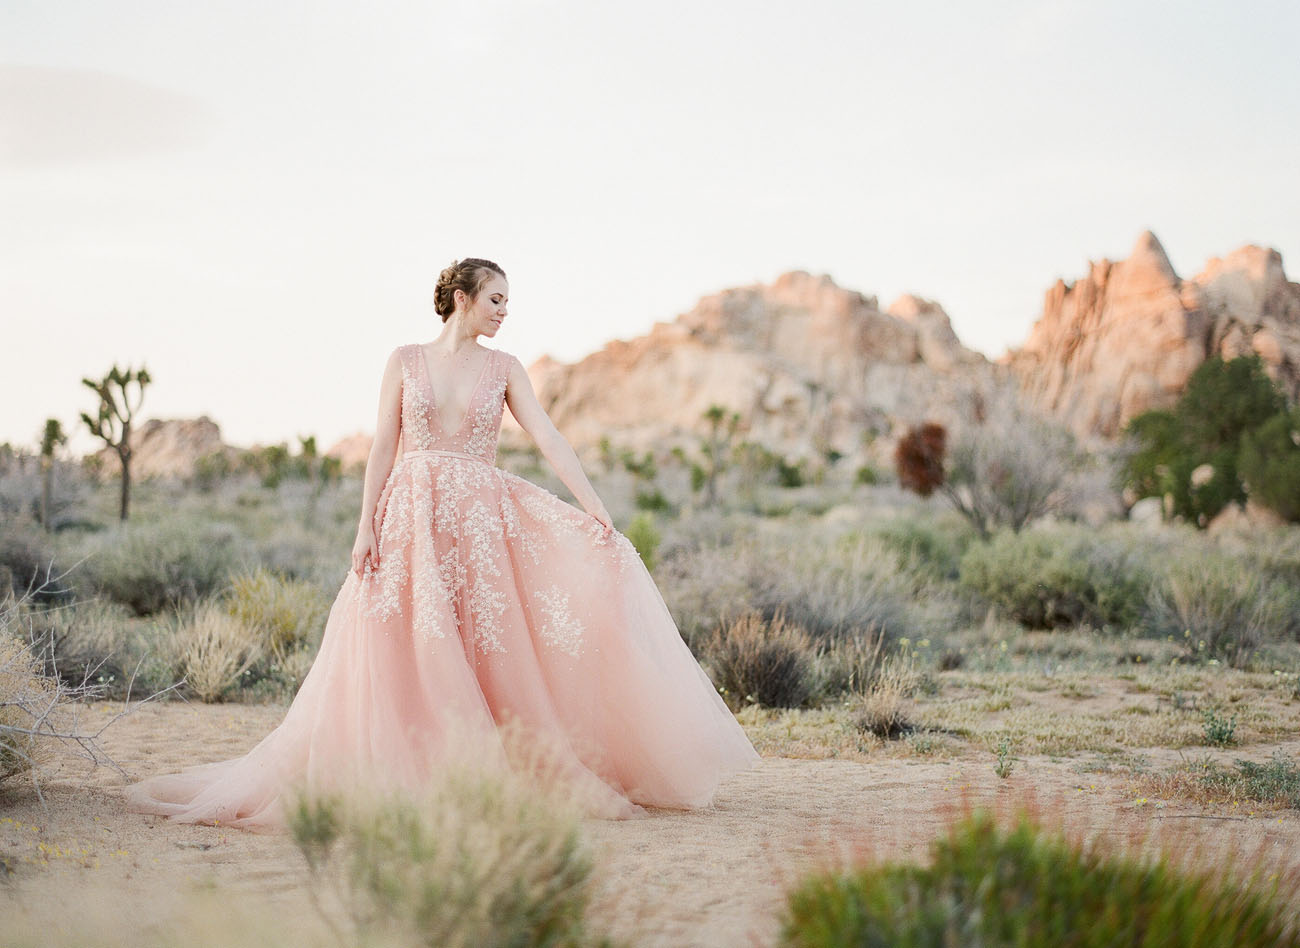 A Dreamy Pink Wedding Dress captured in Joshua Tree